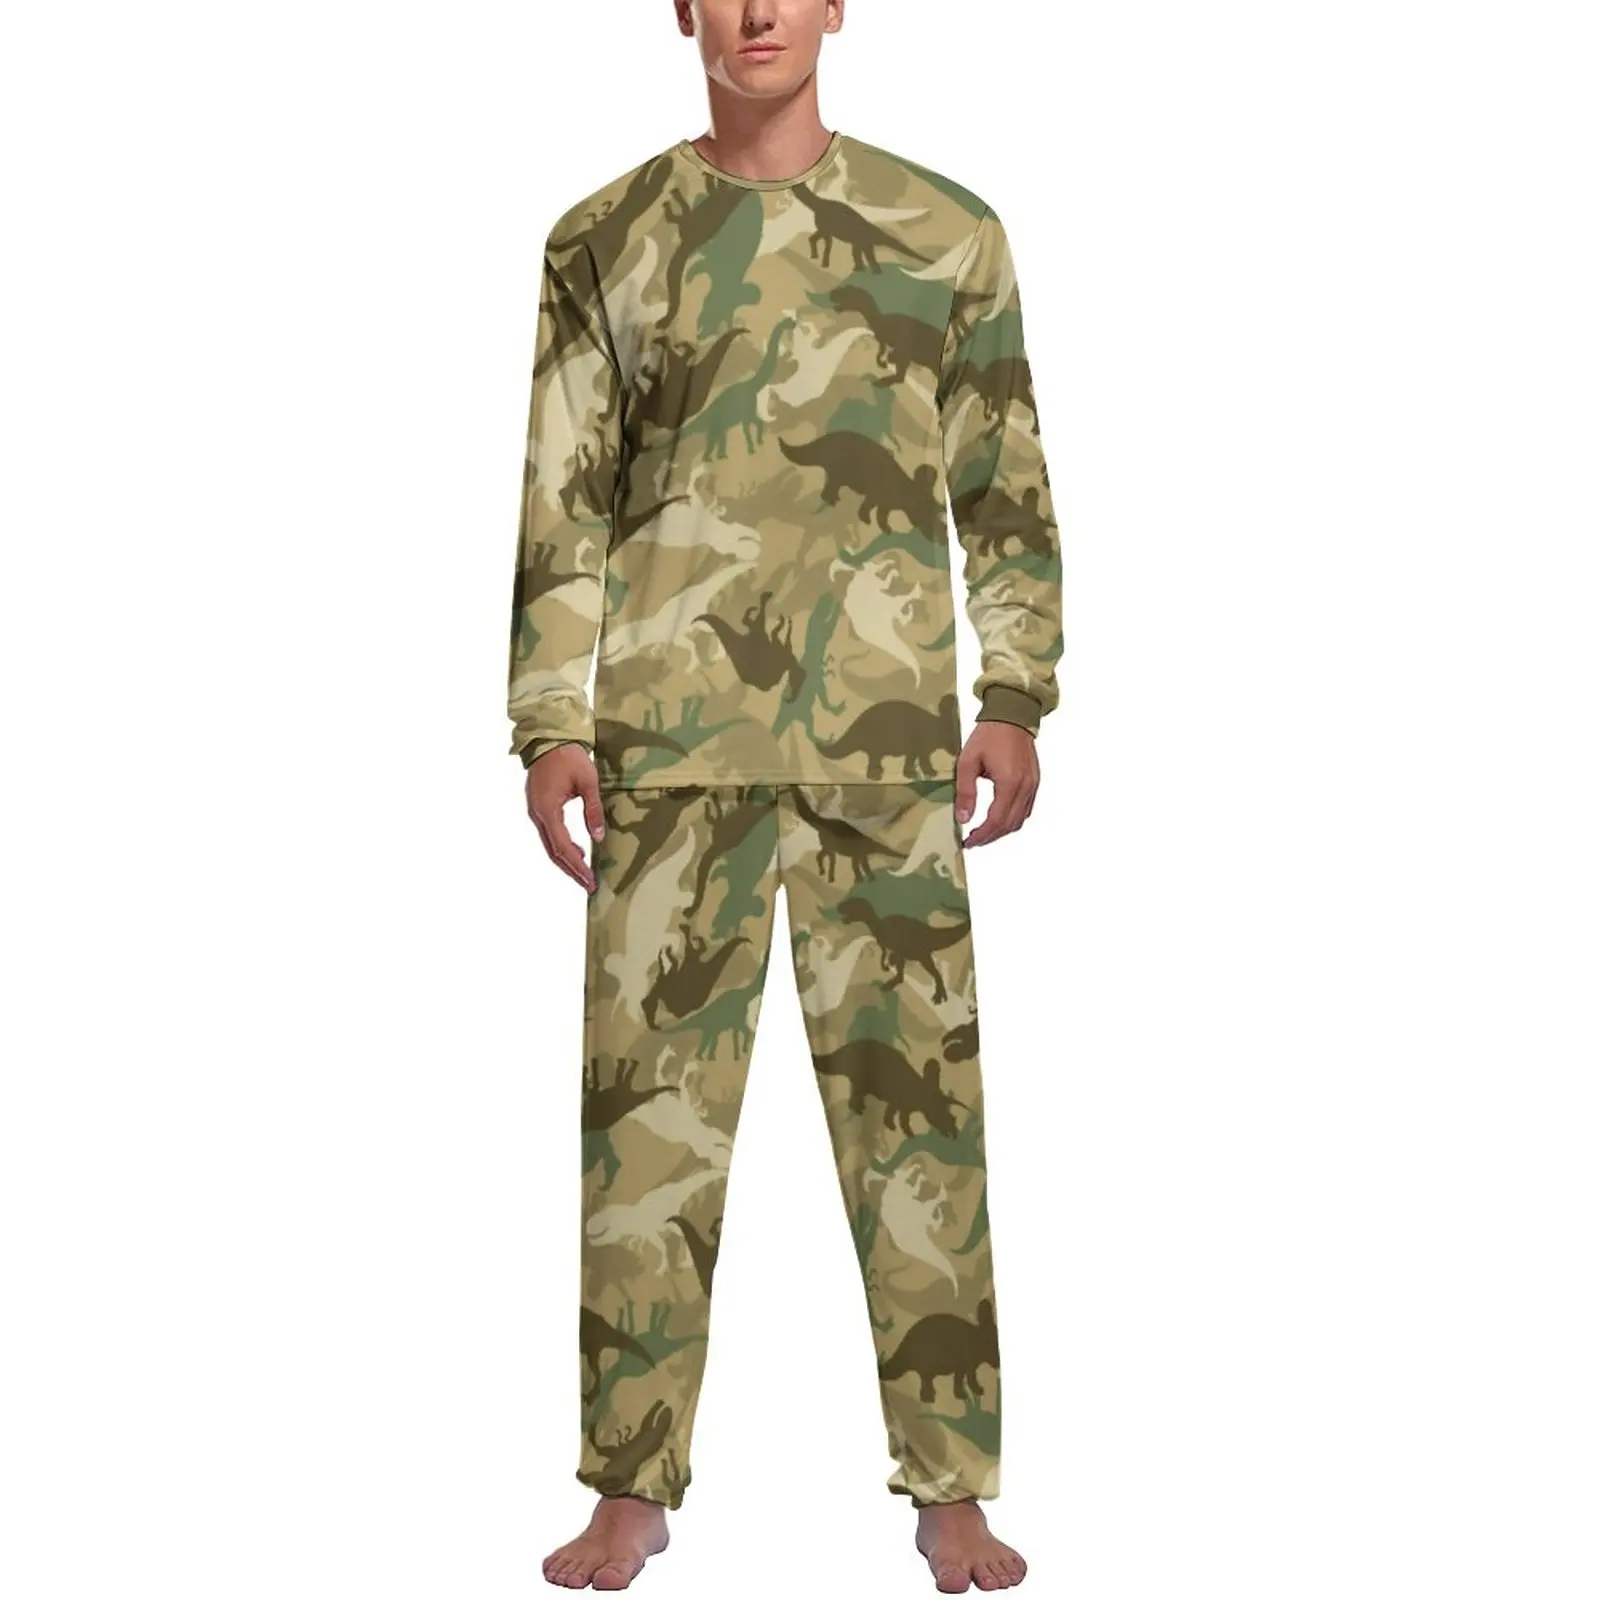 Camouflage Dinosaurs Print Pajamas Long Sleeves Abstract Animal 2 Piece Casual Pajama Sets Spring Man Printed Elegant Sleepwear